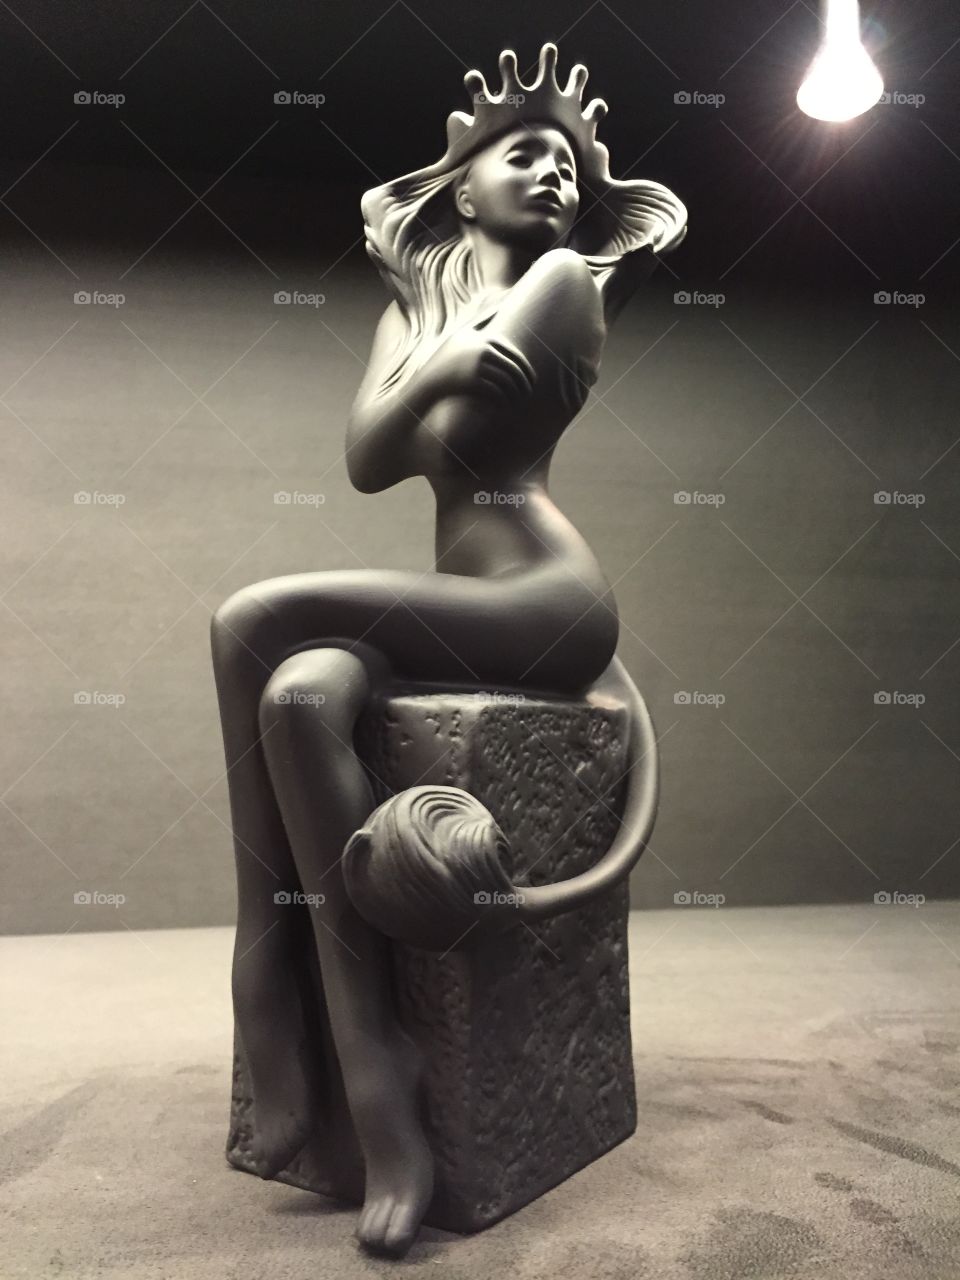 Nude, People, Adult, Woman, Sculpture